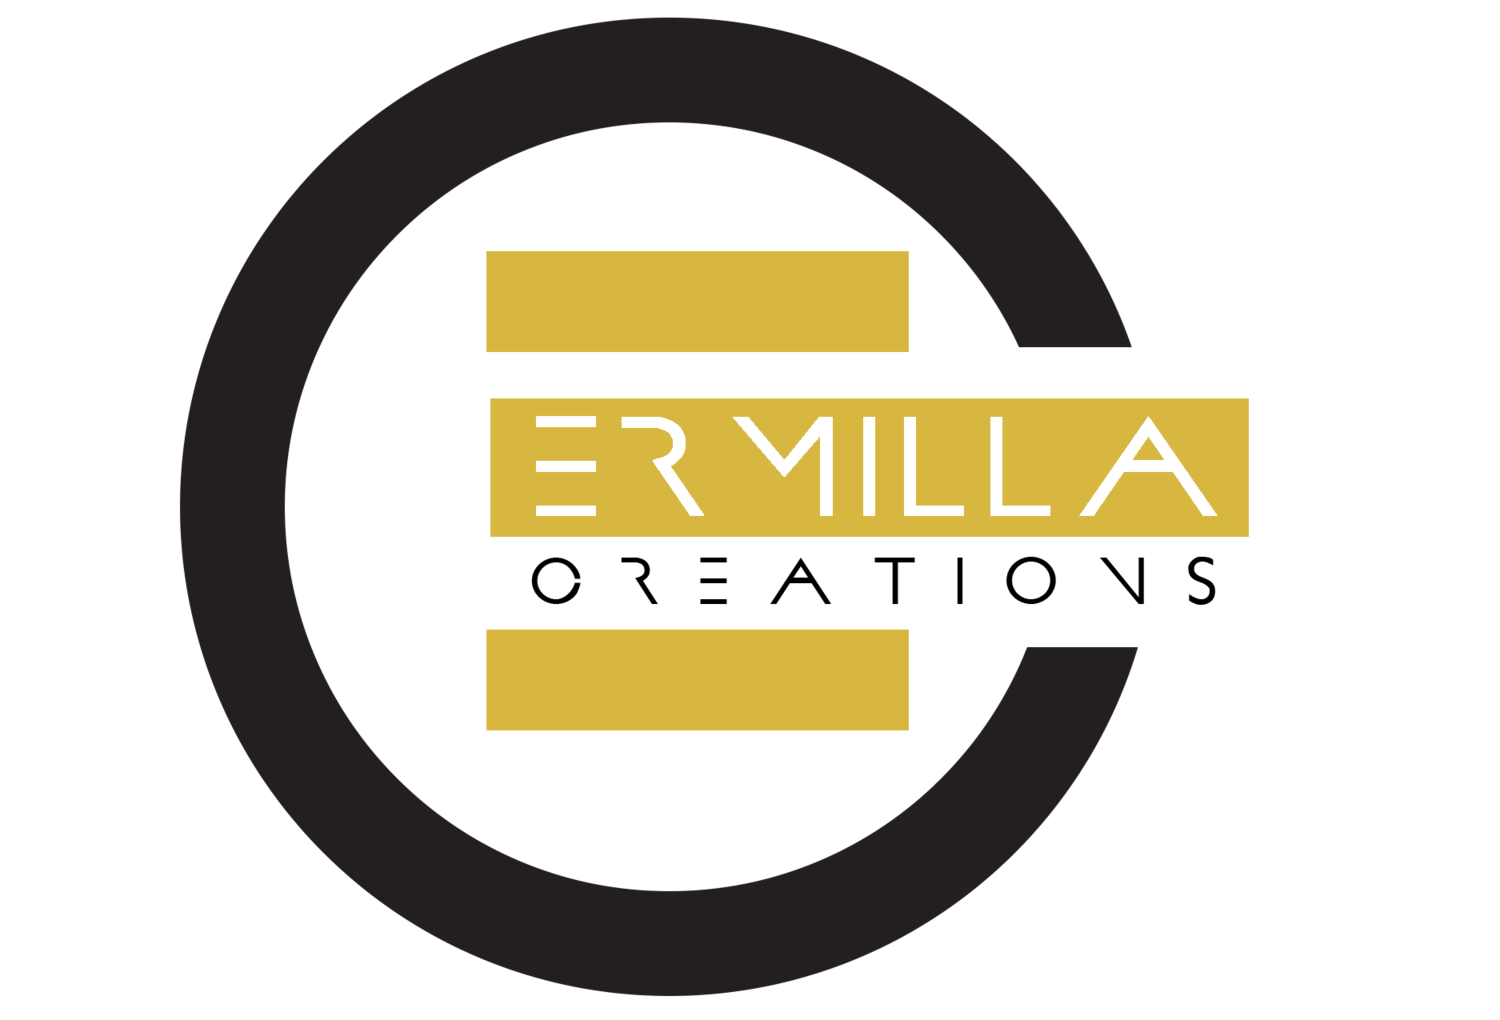 Ermilla Creations